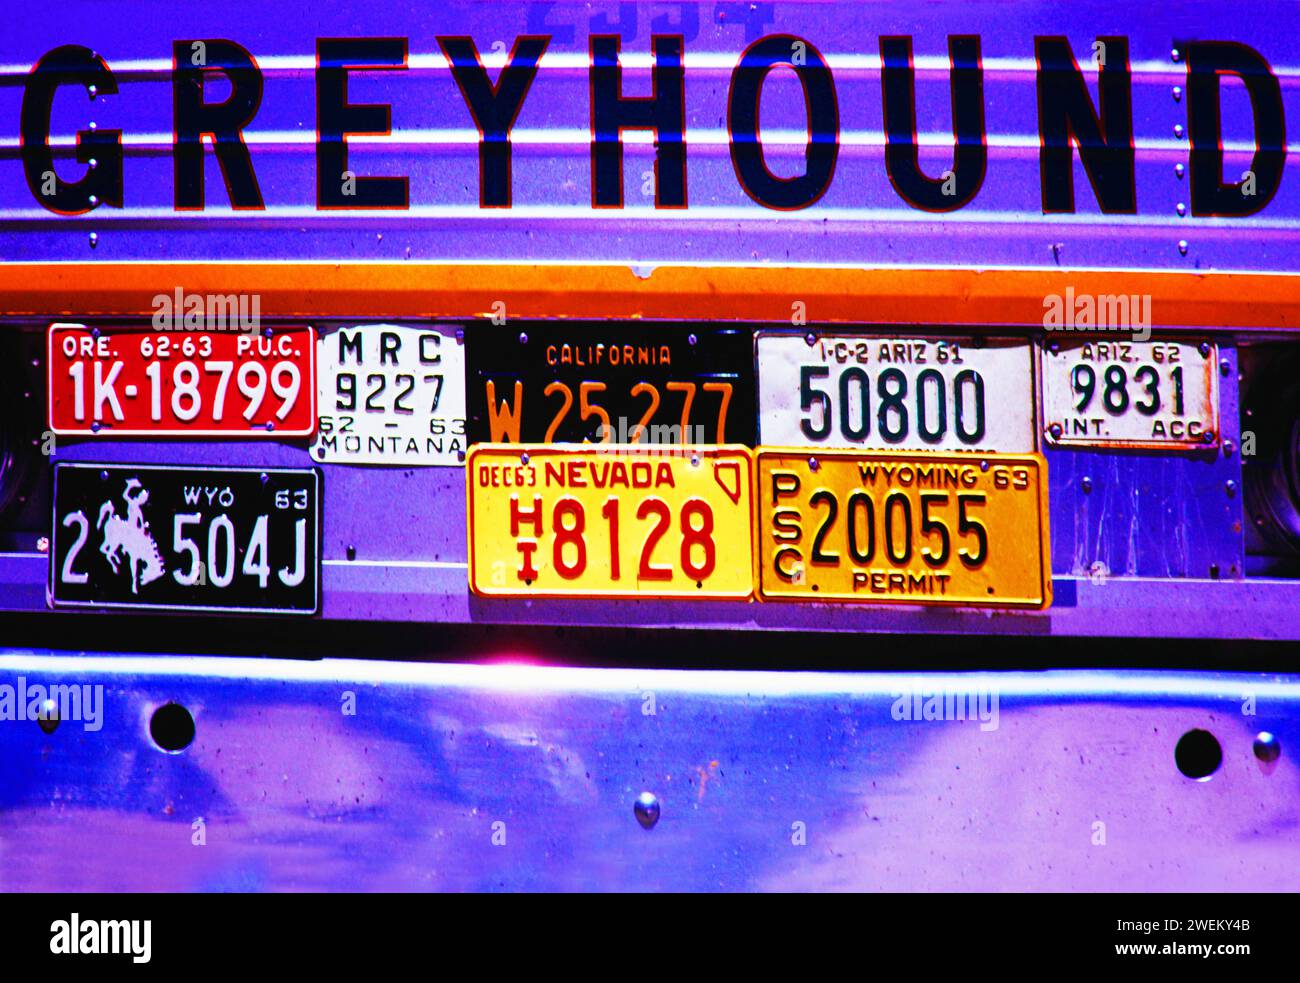 Greyhound bus USA,20240101, Aufnahme ca. 1964, Symbolbild, bus GREYHOUND *** bus GREYHOUND USA, 20240101, photo ca 1964, image symbolique, bus GREYHOUND Banque D'Images